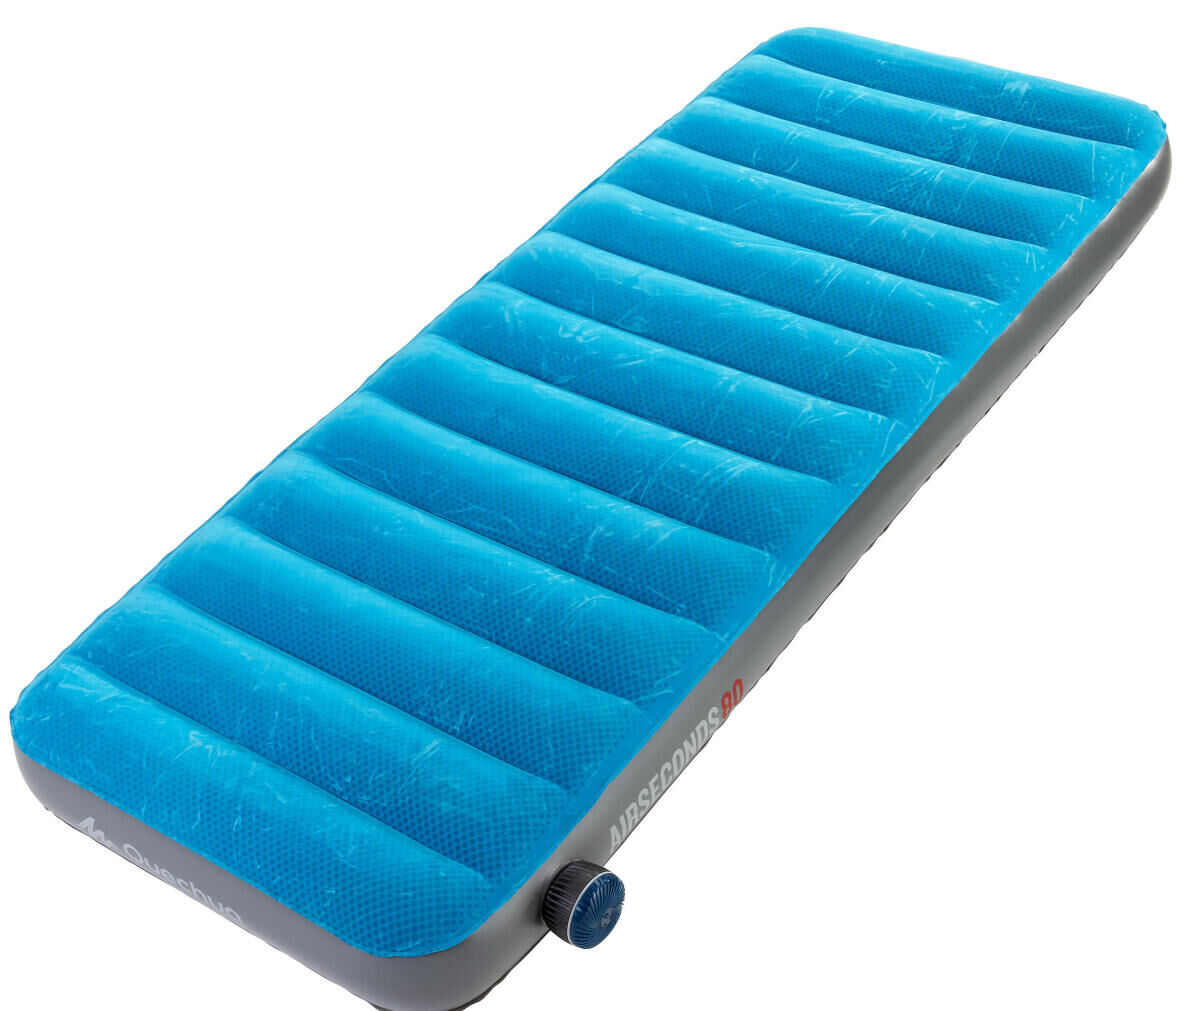 Maintaining and repairing an Air basic or Air comfort inflatable mattress at Decathlon